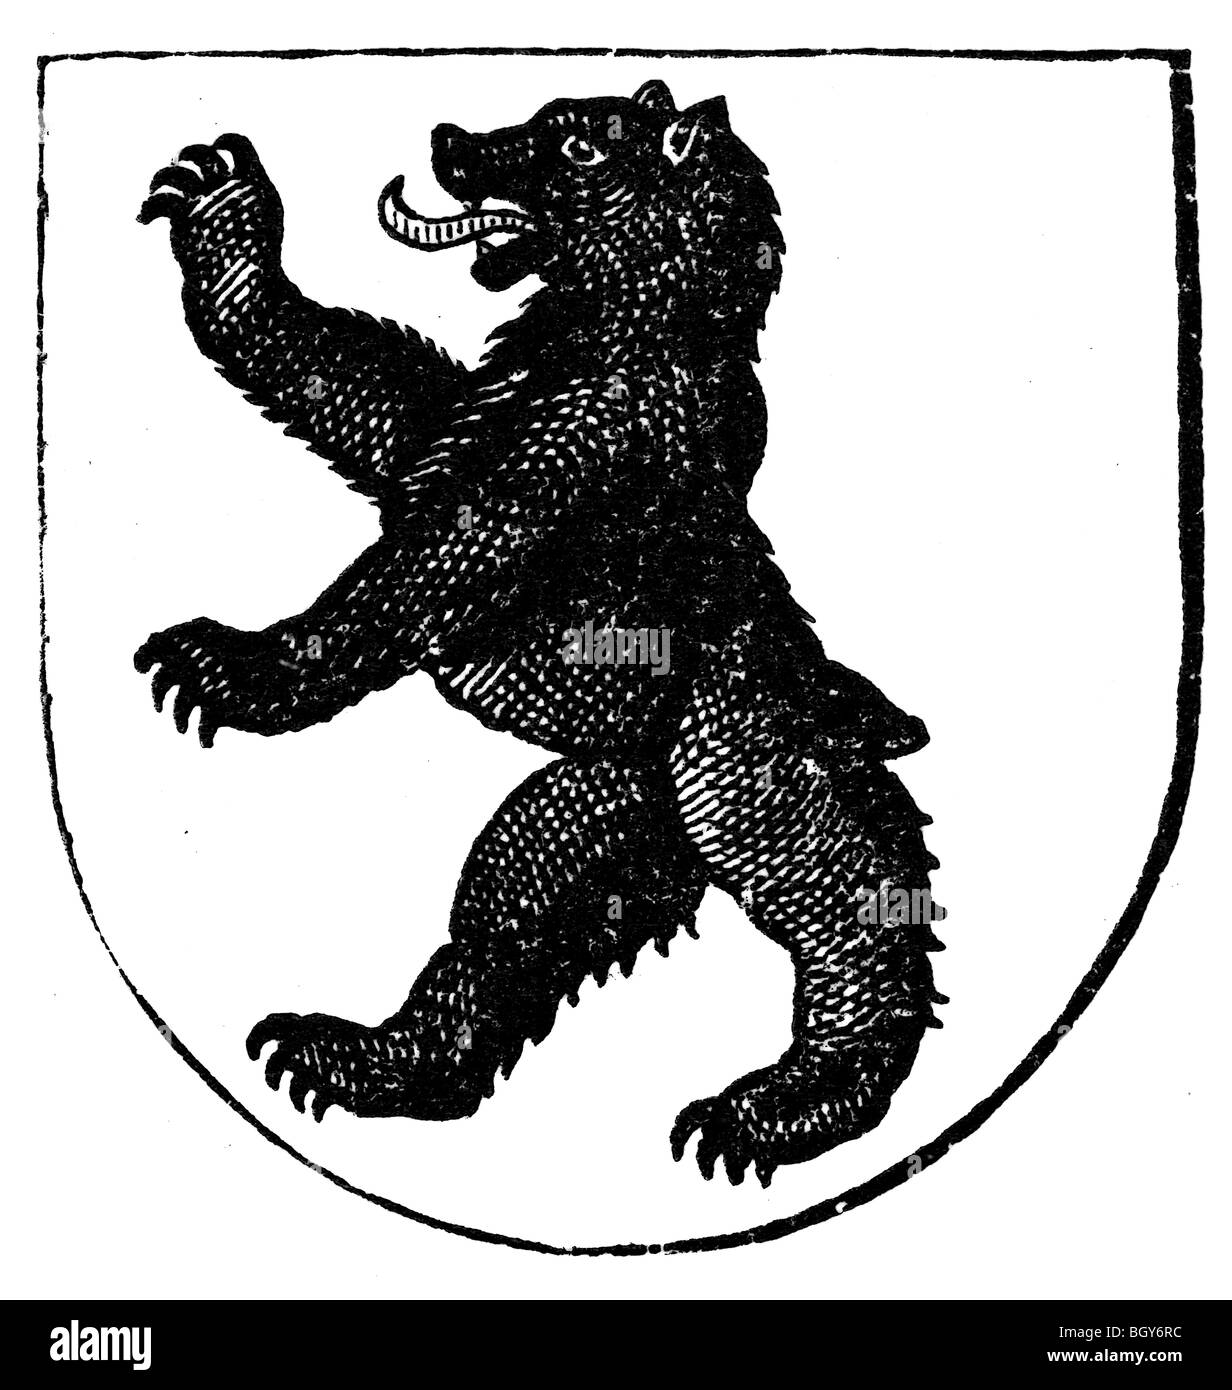 Wappen des Kantons Appenzell, um 1900 Stockfoto